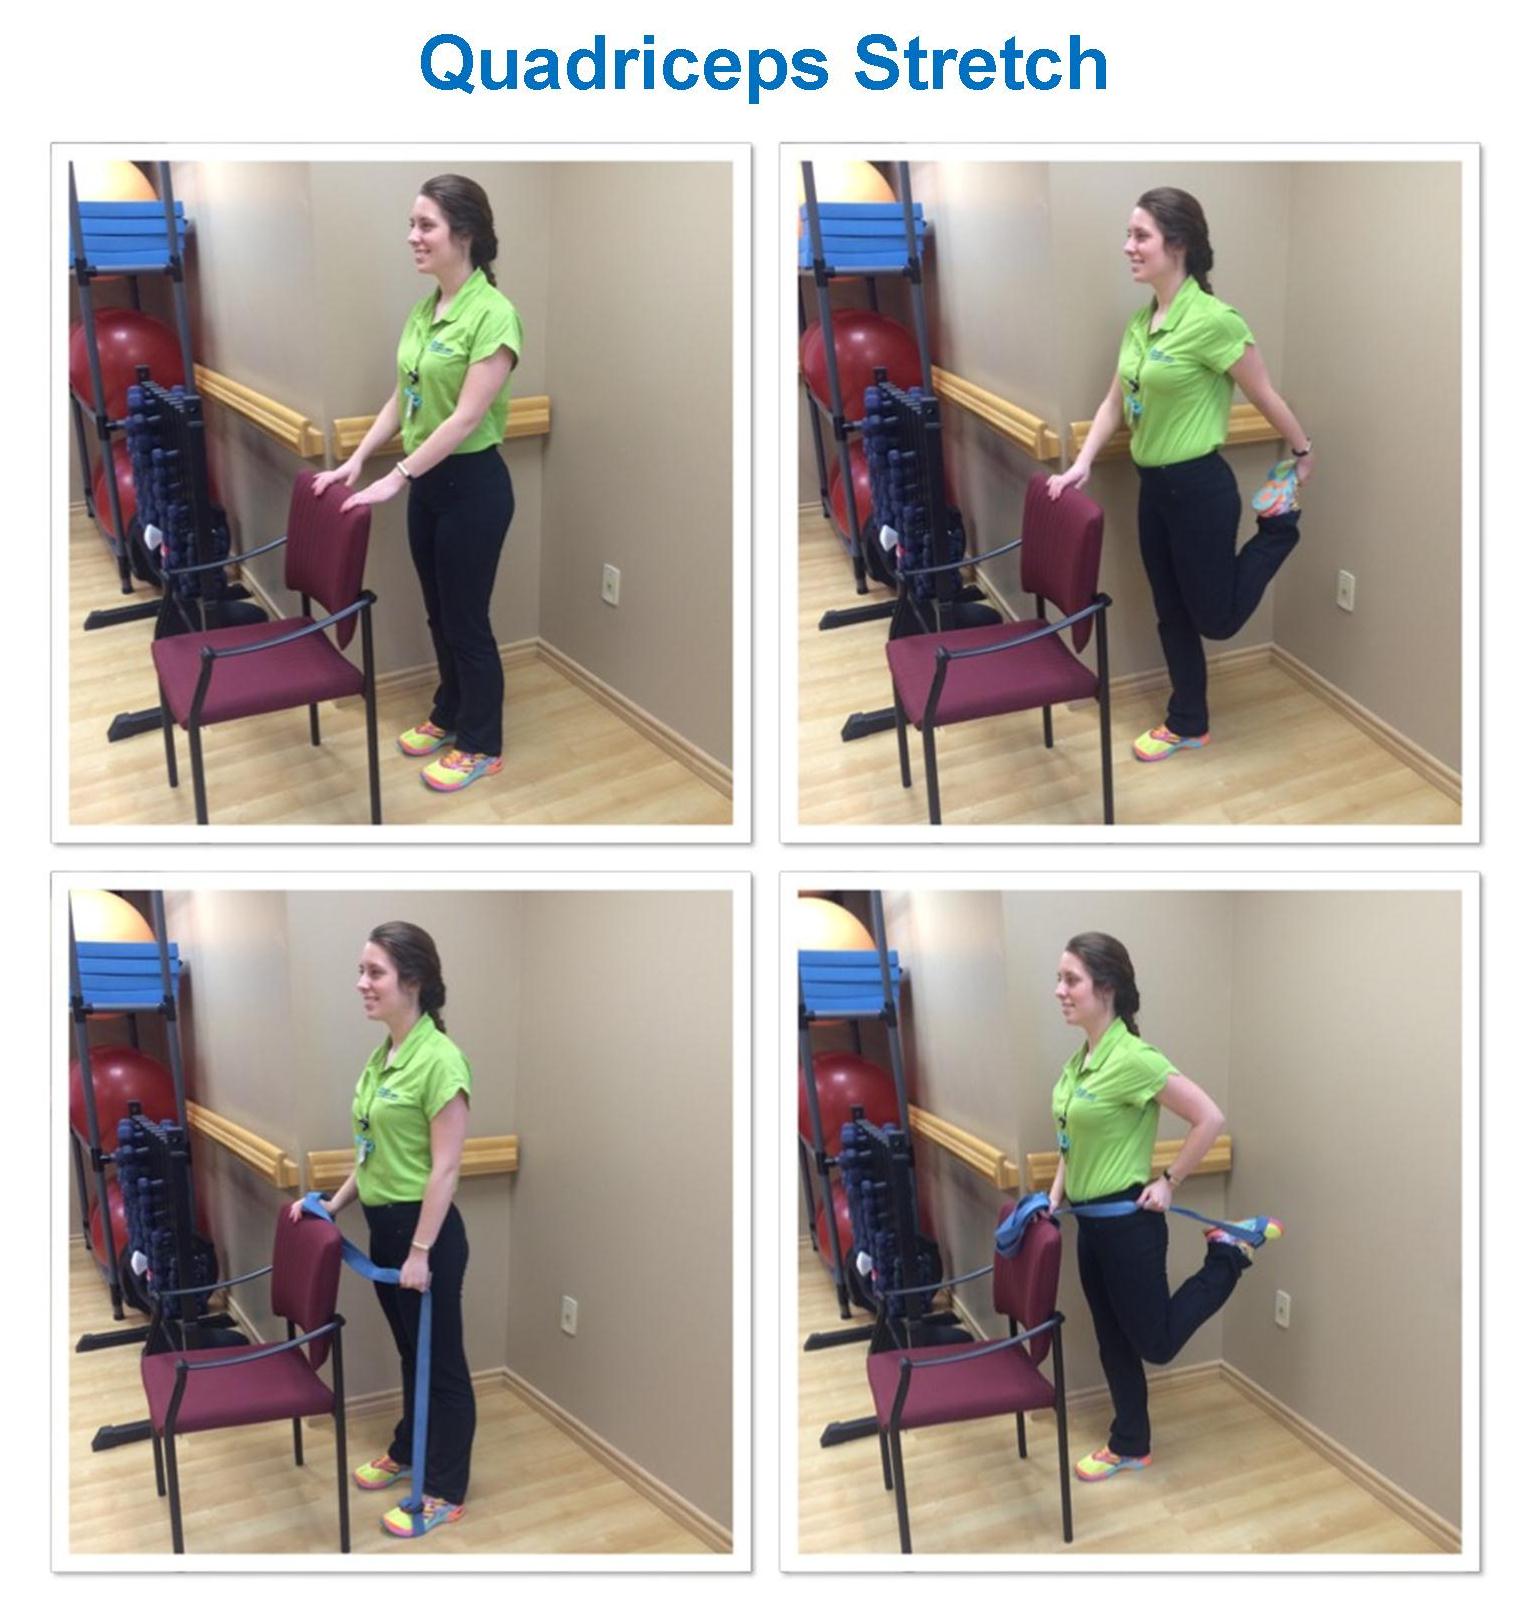 Quadriceps stretch